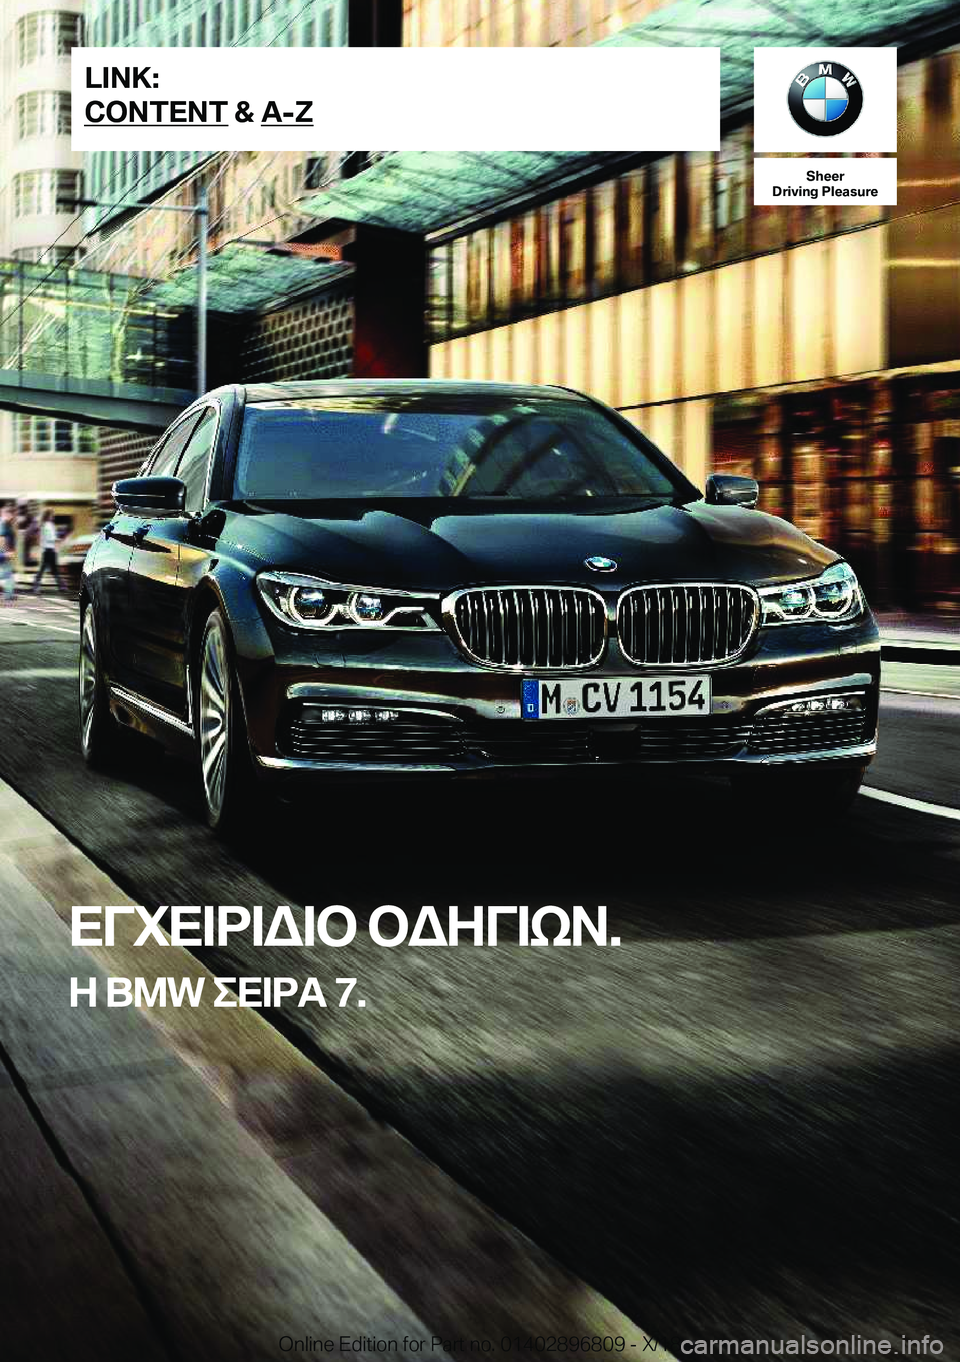 BMW 7 SERIES 2019  ΟΔΗΓΌΣ ΧΡΉΣΗΣ (in Greek) �S�h�e�e�r
�D�r�i�v�i�n�g��P�l�e�a�s�u�r�e
XViX=d=W=b�bWZV=kA�.
Z��B�M�W�eX=dT��7�.�L�I�N�K�:
�C�O�N�T�E�N�T��&��A�-�Z�O�n�l�i�n�e��E�d�i�t�i�o�n��f�o�r��P�a�r�t��n�o